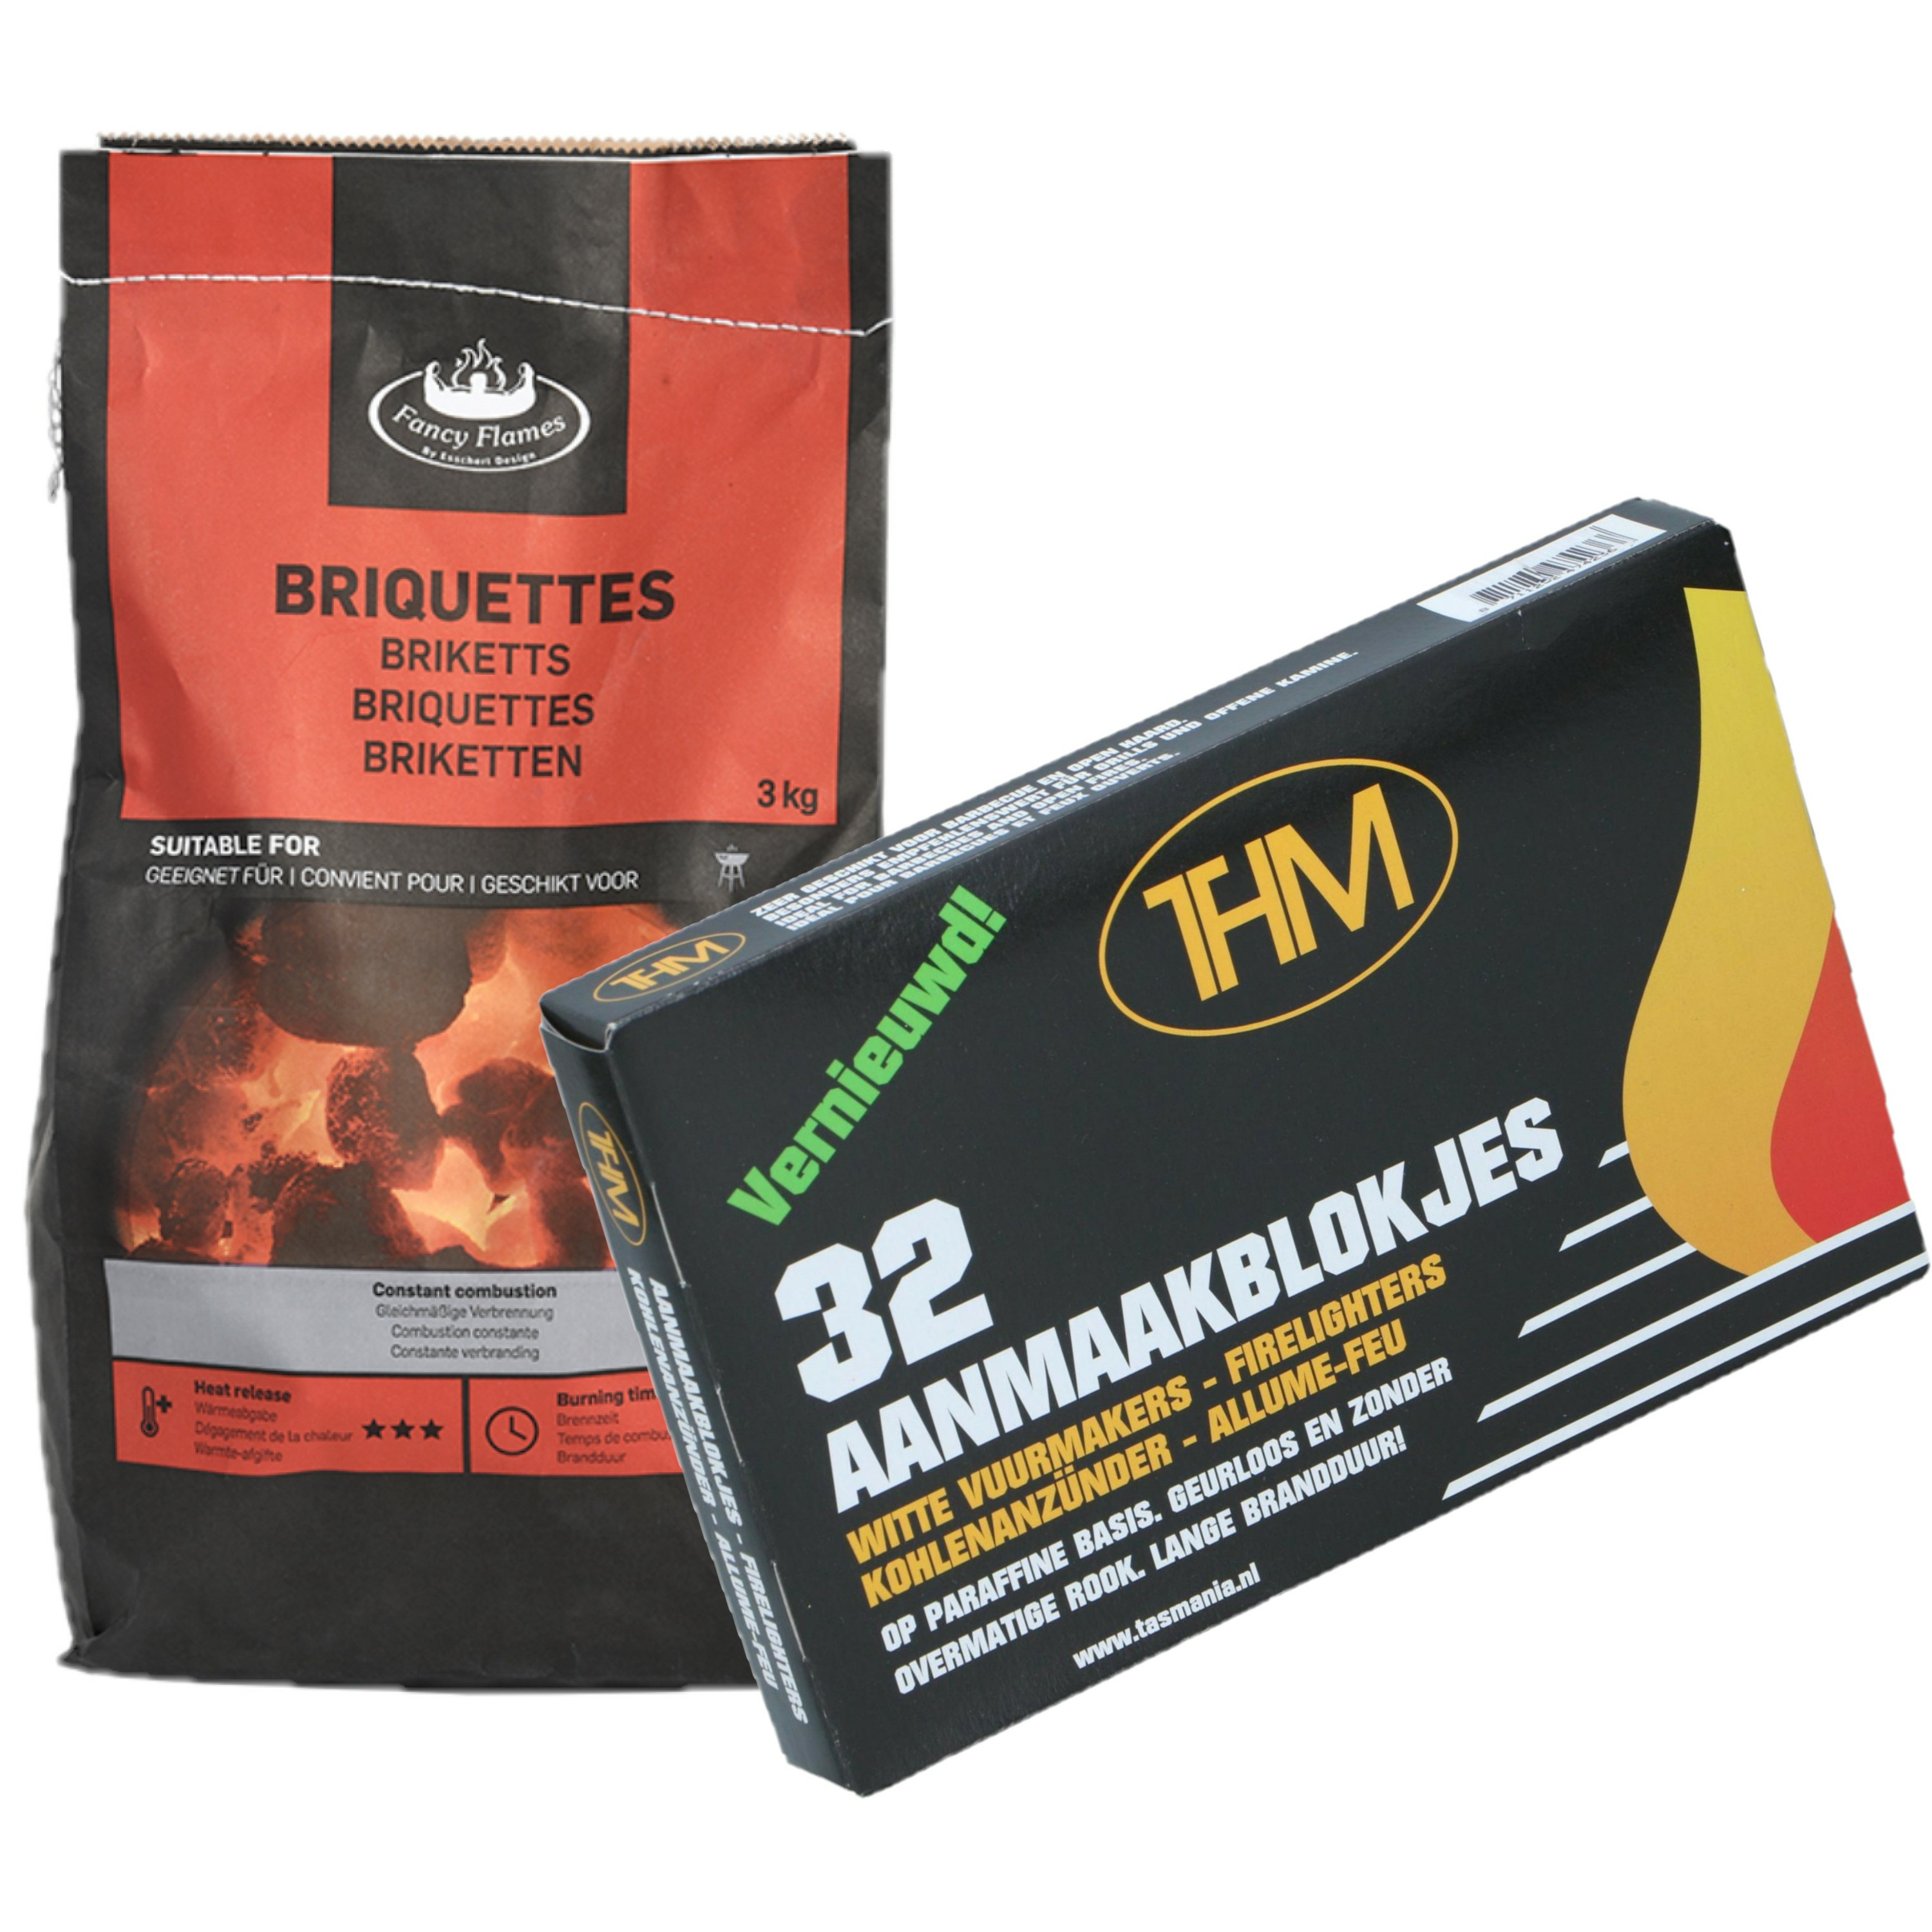 BBQ aanmaakblokjes 32 stuks van paraffine incl. houtskool briketten 3kg